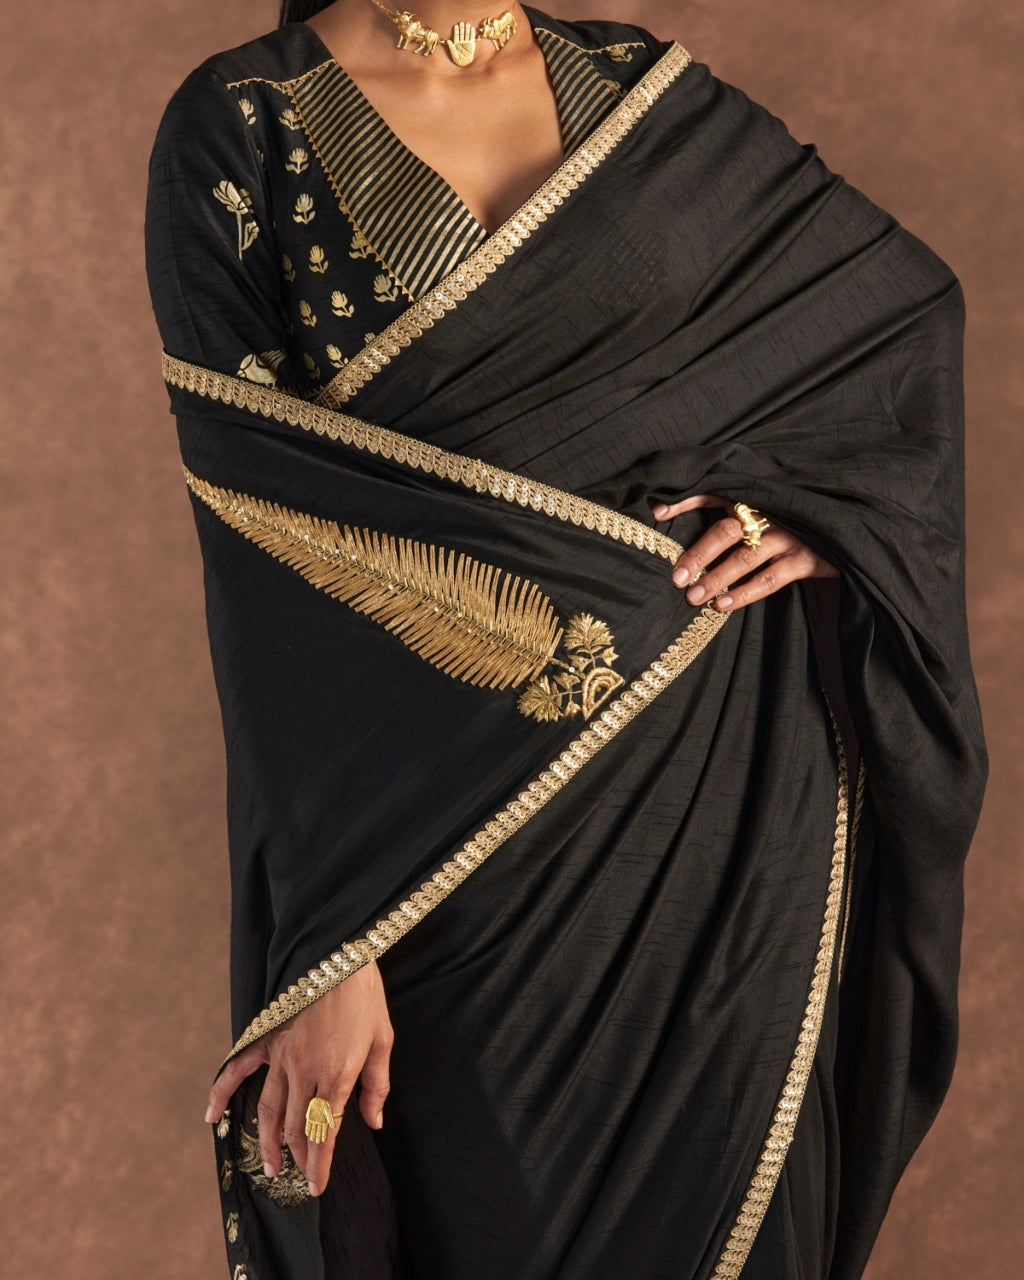 Black 'Paan-Patti' Sari